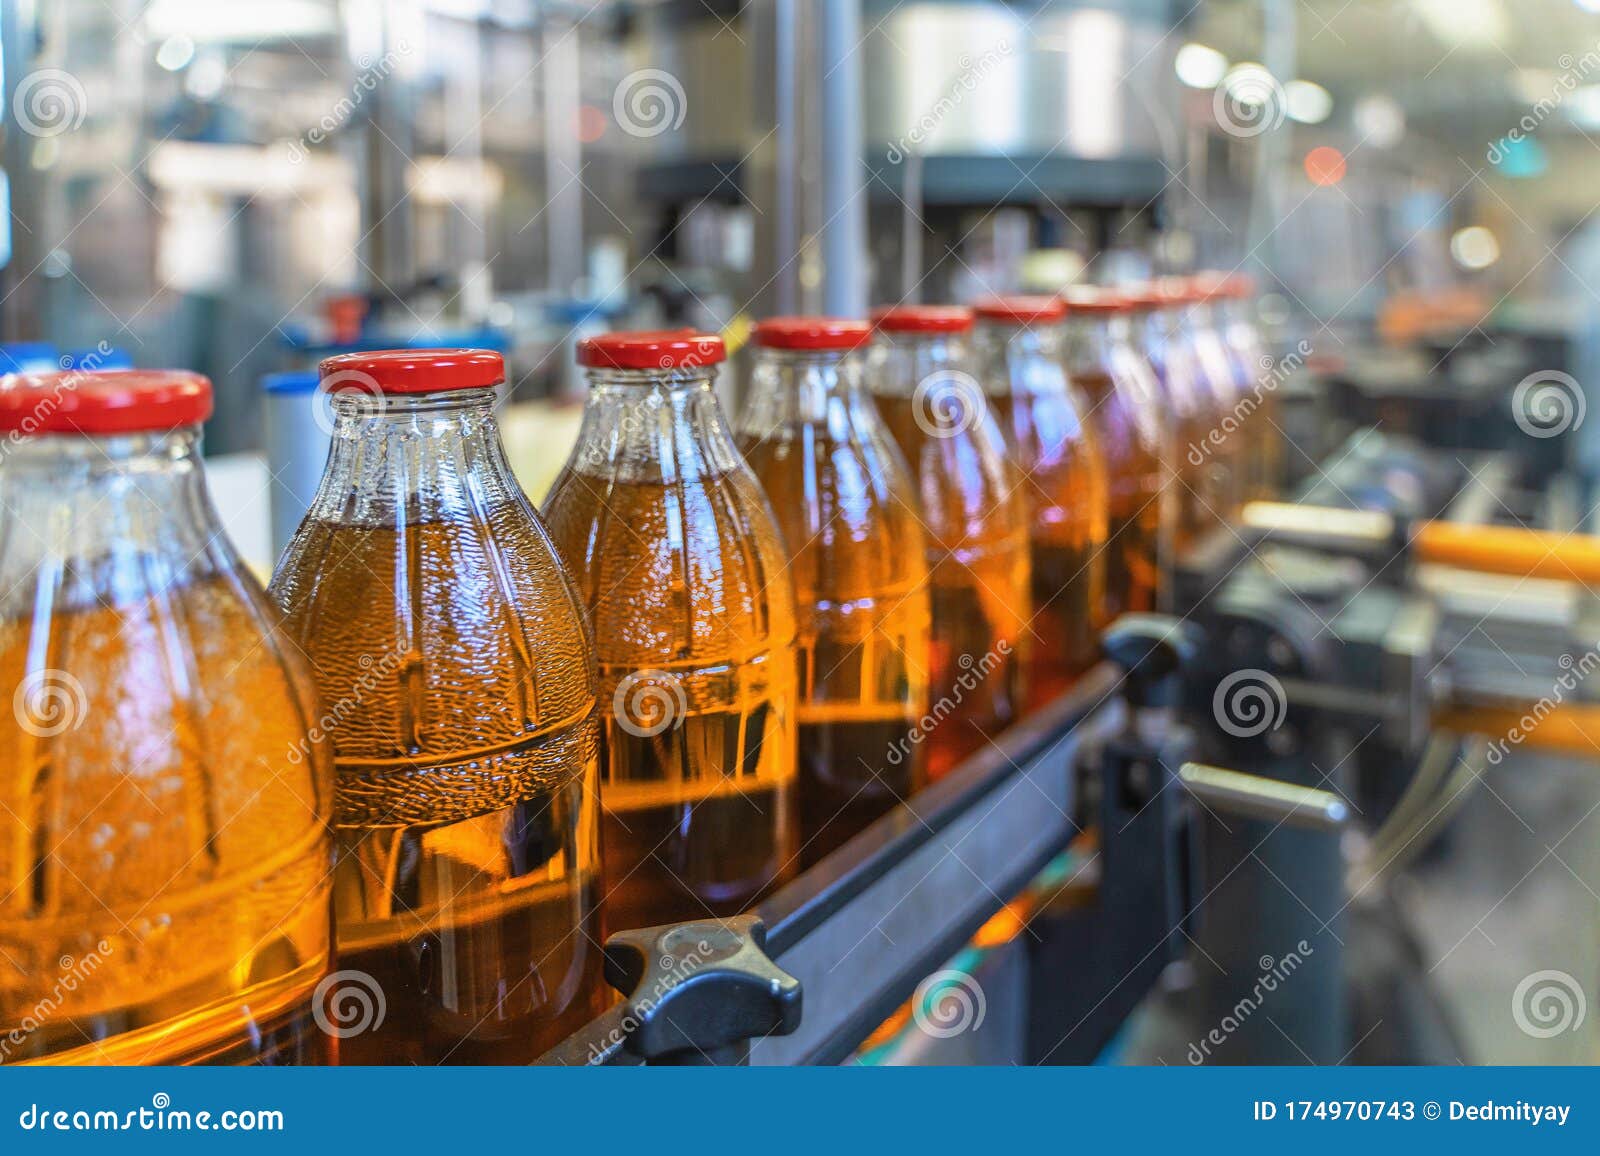 conveyor belt, juice in bottles on beverage plant or factory interior, industrial production line, selective focus